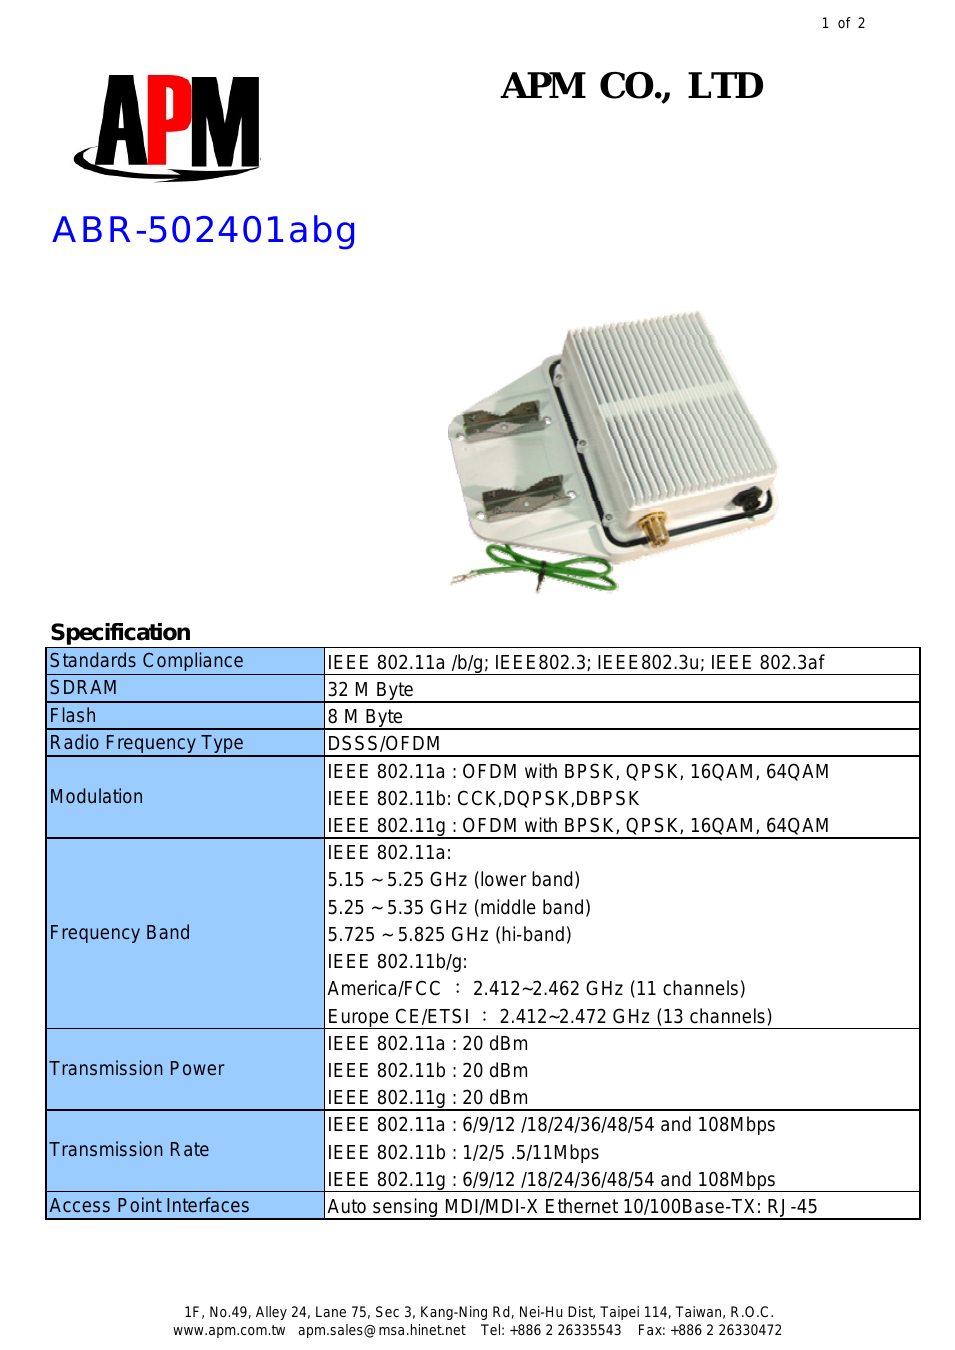 ABR-502401ABG